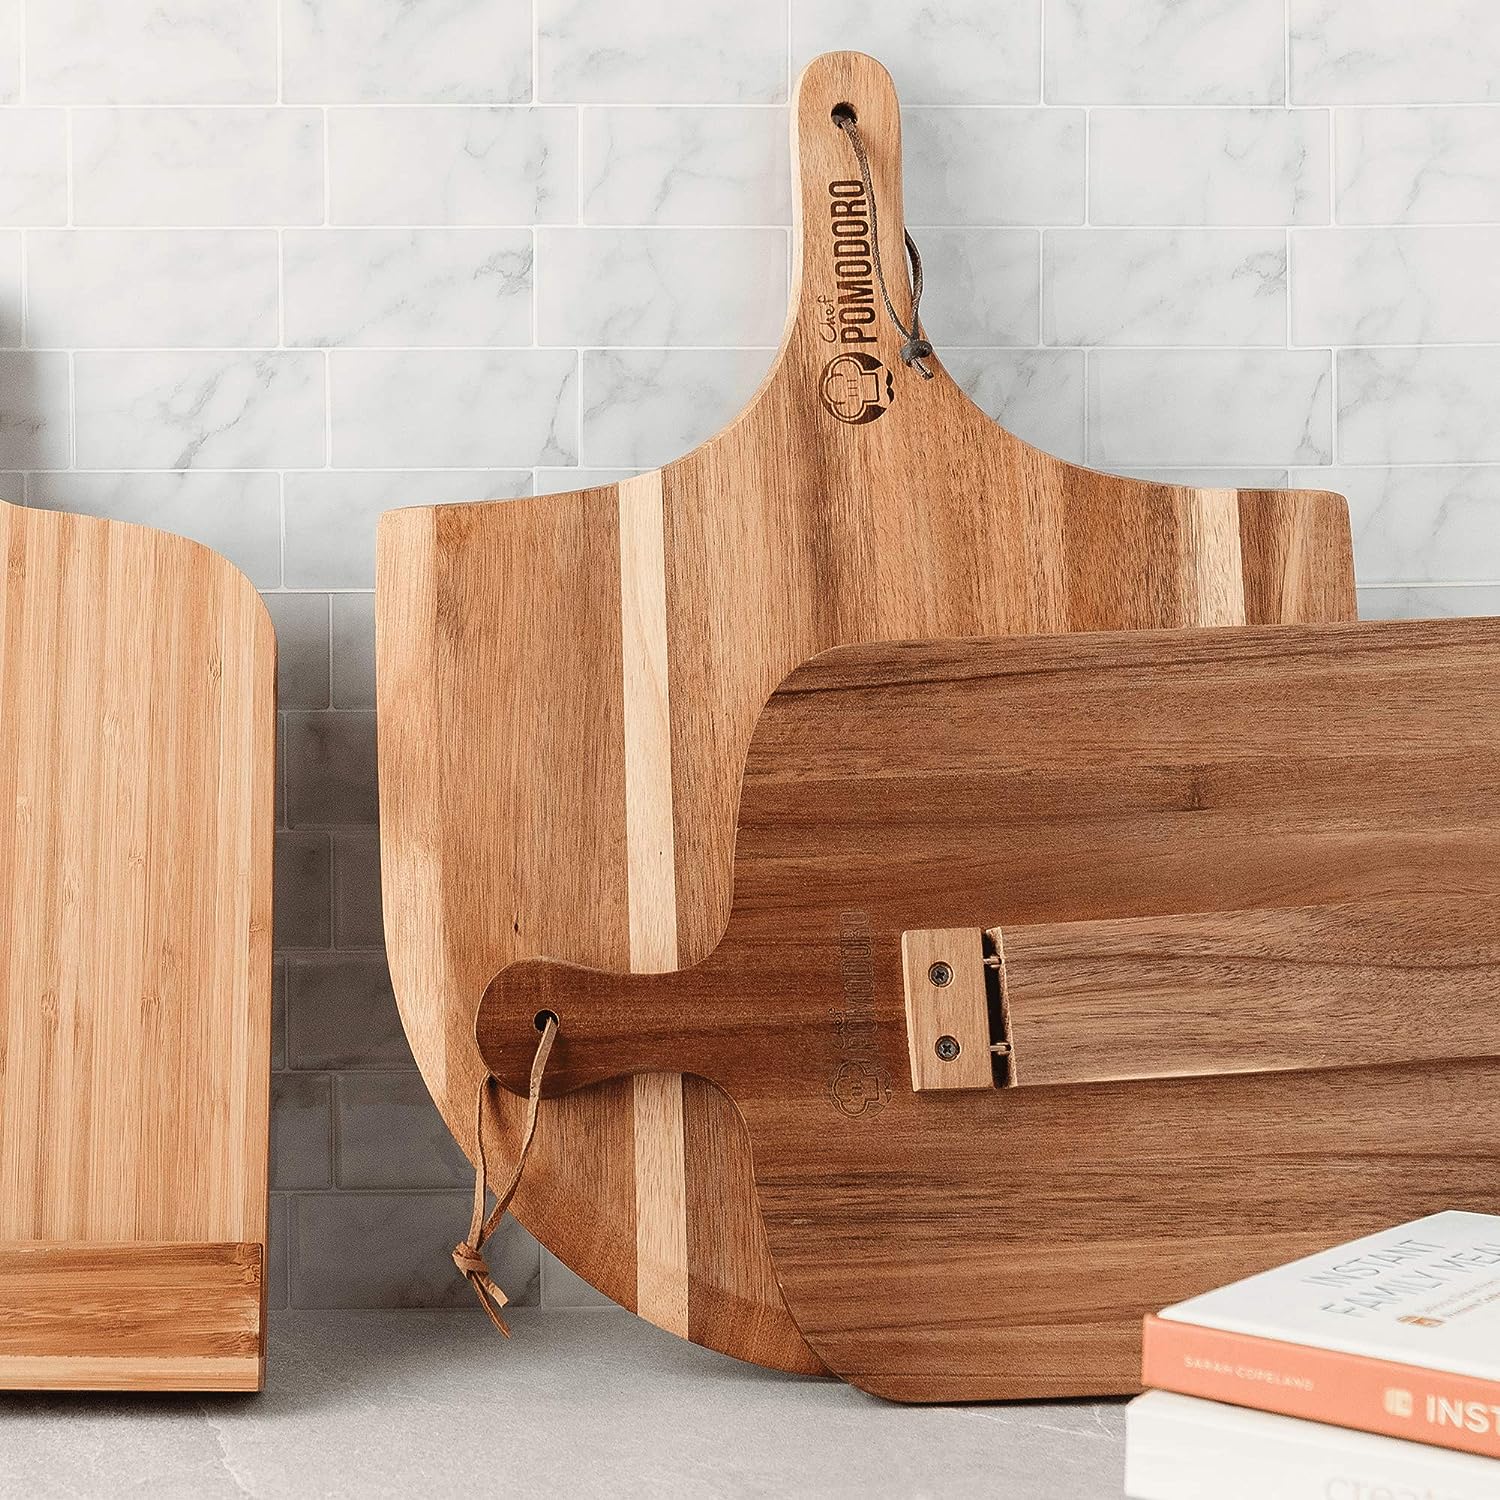 Wooden Cookbook Stand